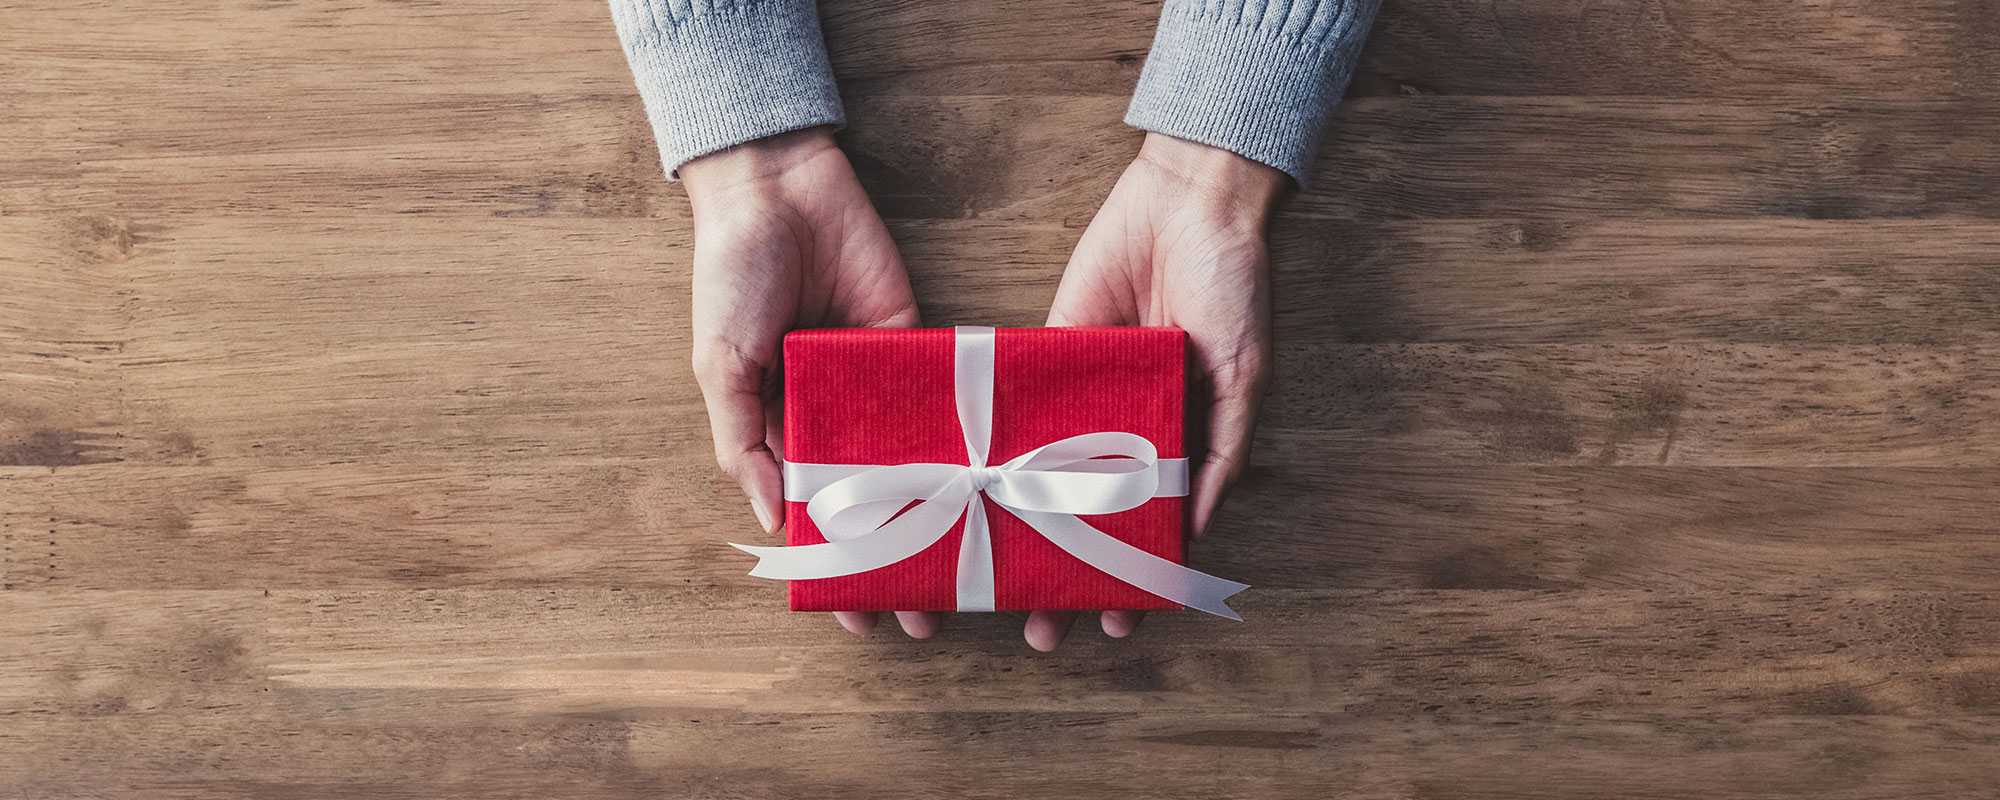  What makes a good housewarming gift?